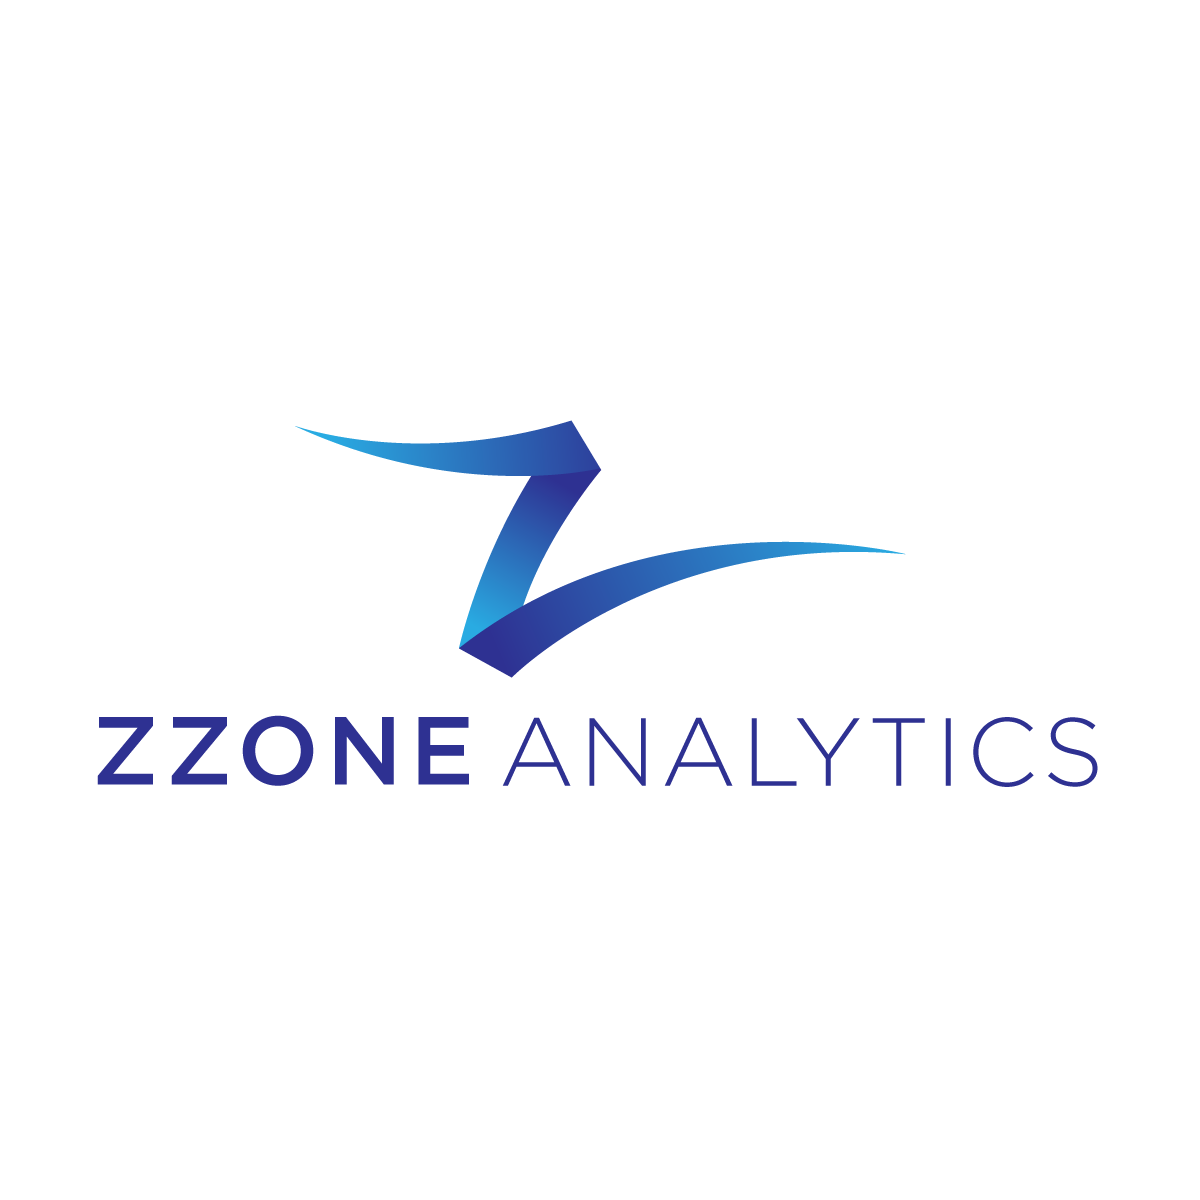 Zzone Analytics